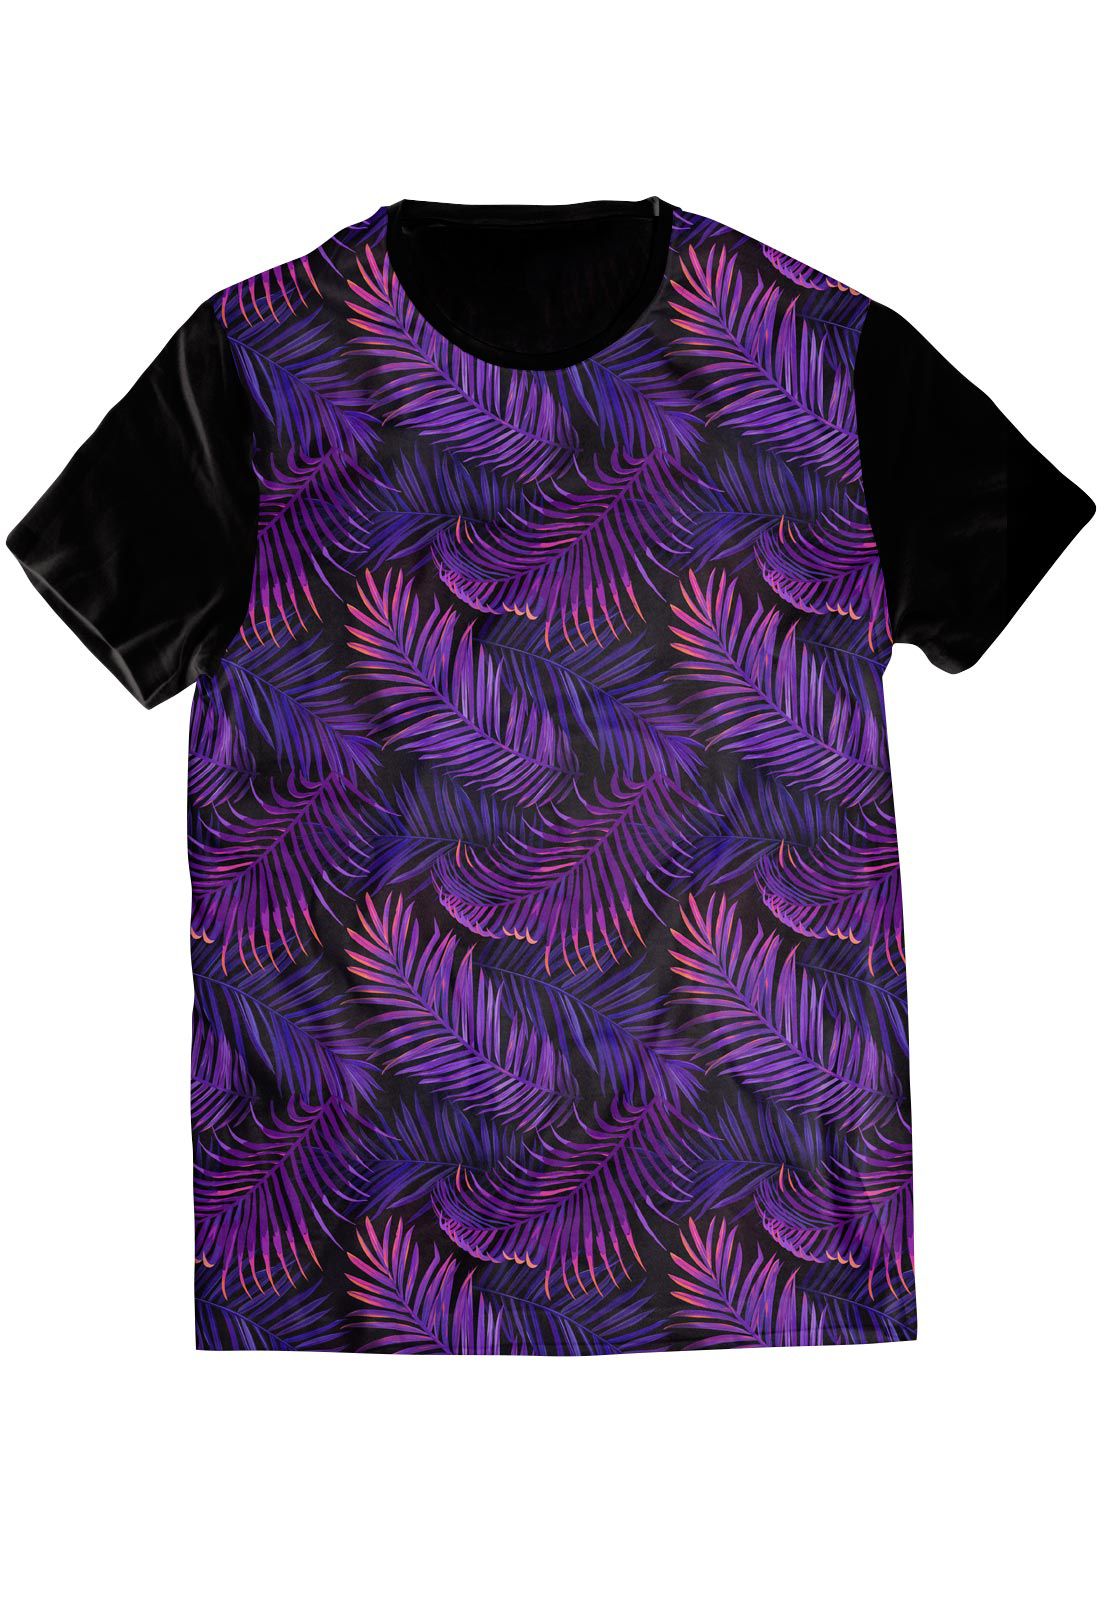 Camiseta Folhagens ElephunK Estampada Tropical Dark Neon Preta